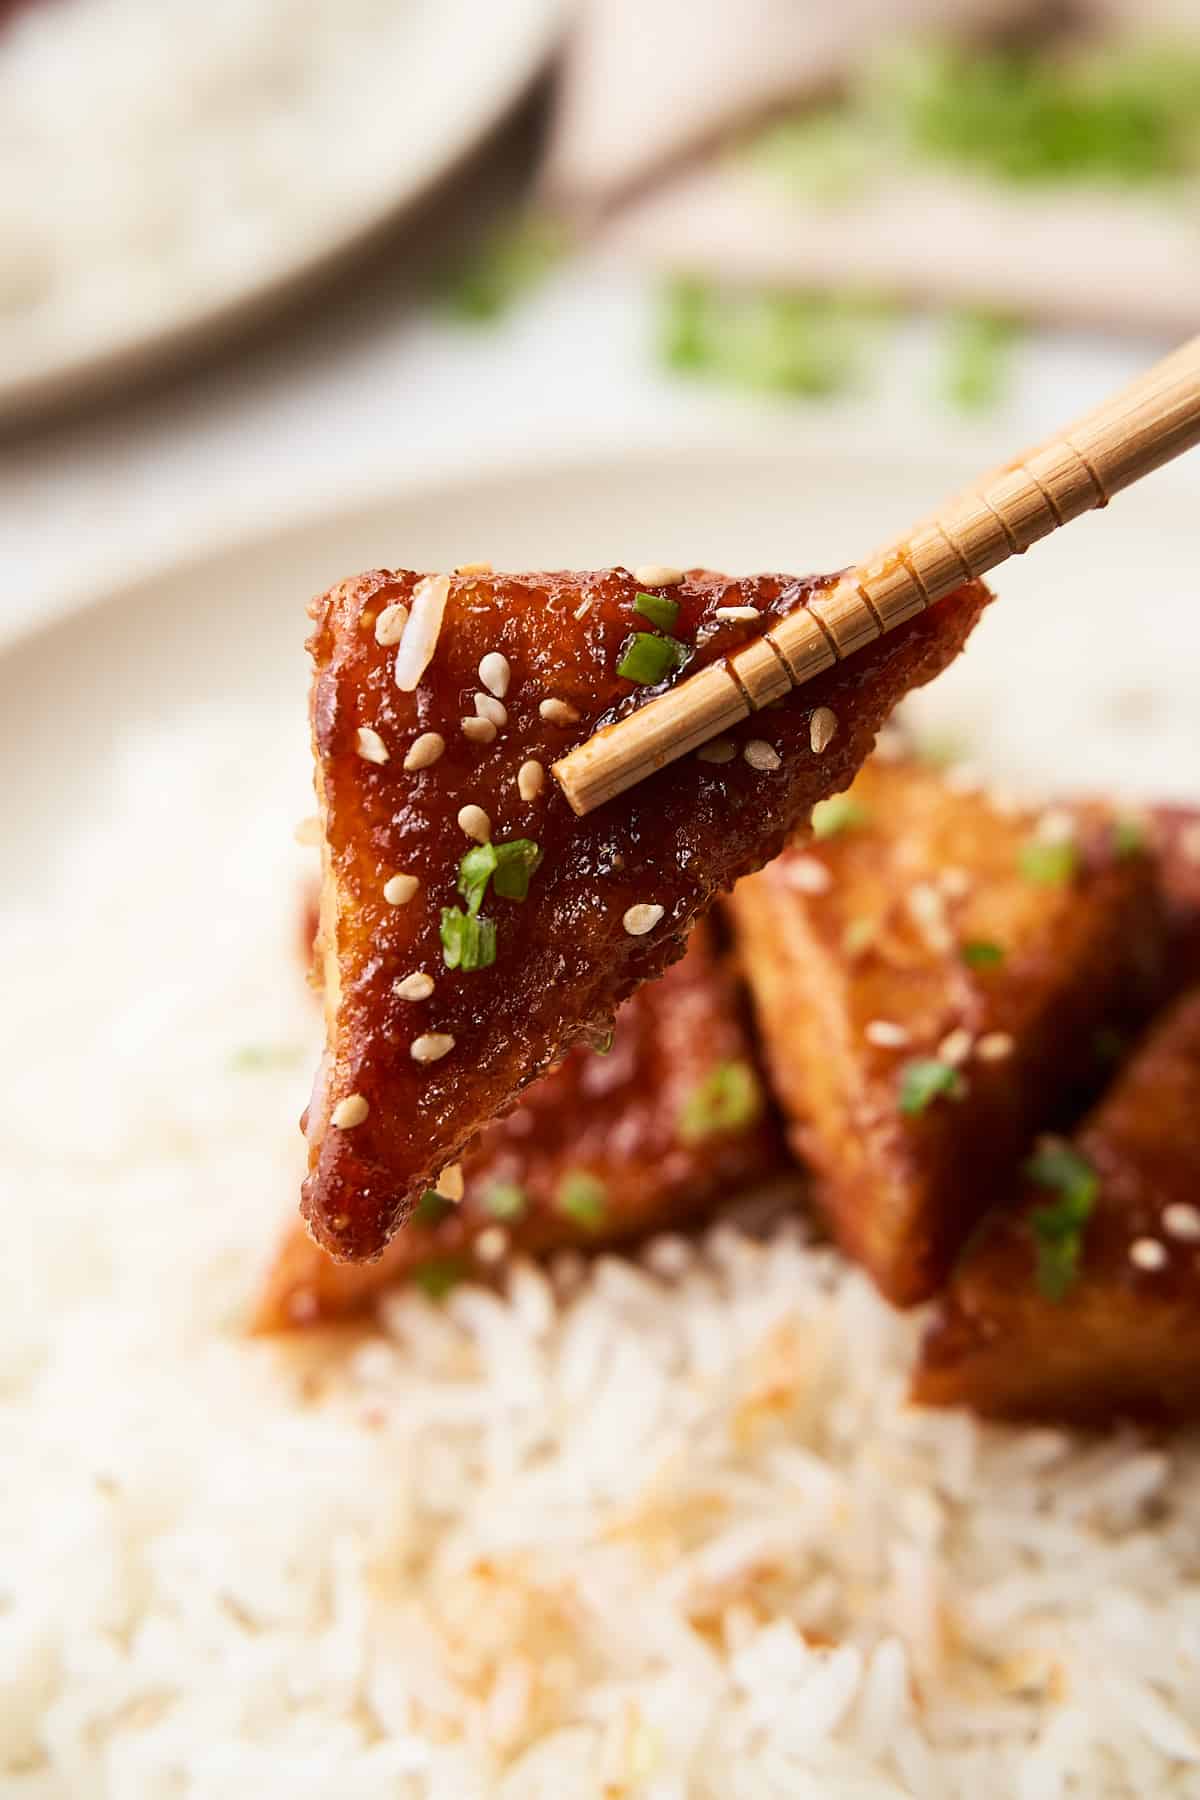 Vegan dish featuring tofu and rice, served with chopsticks.